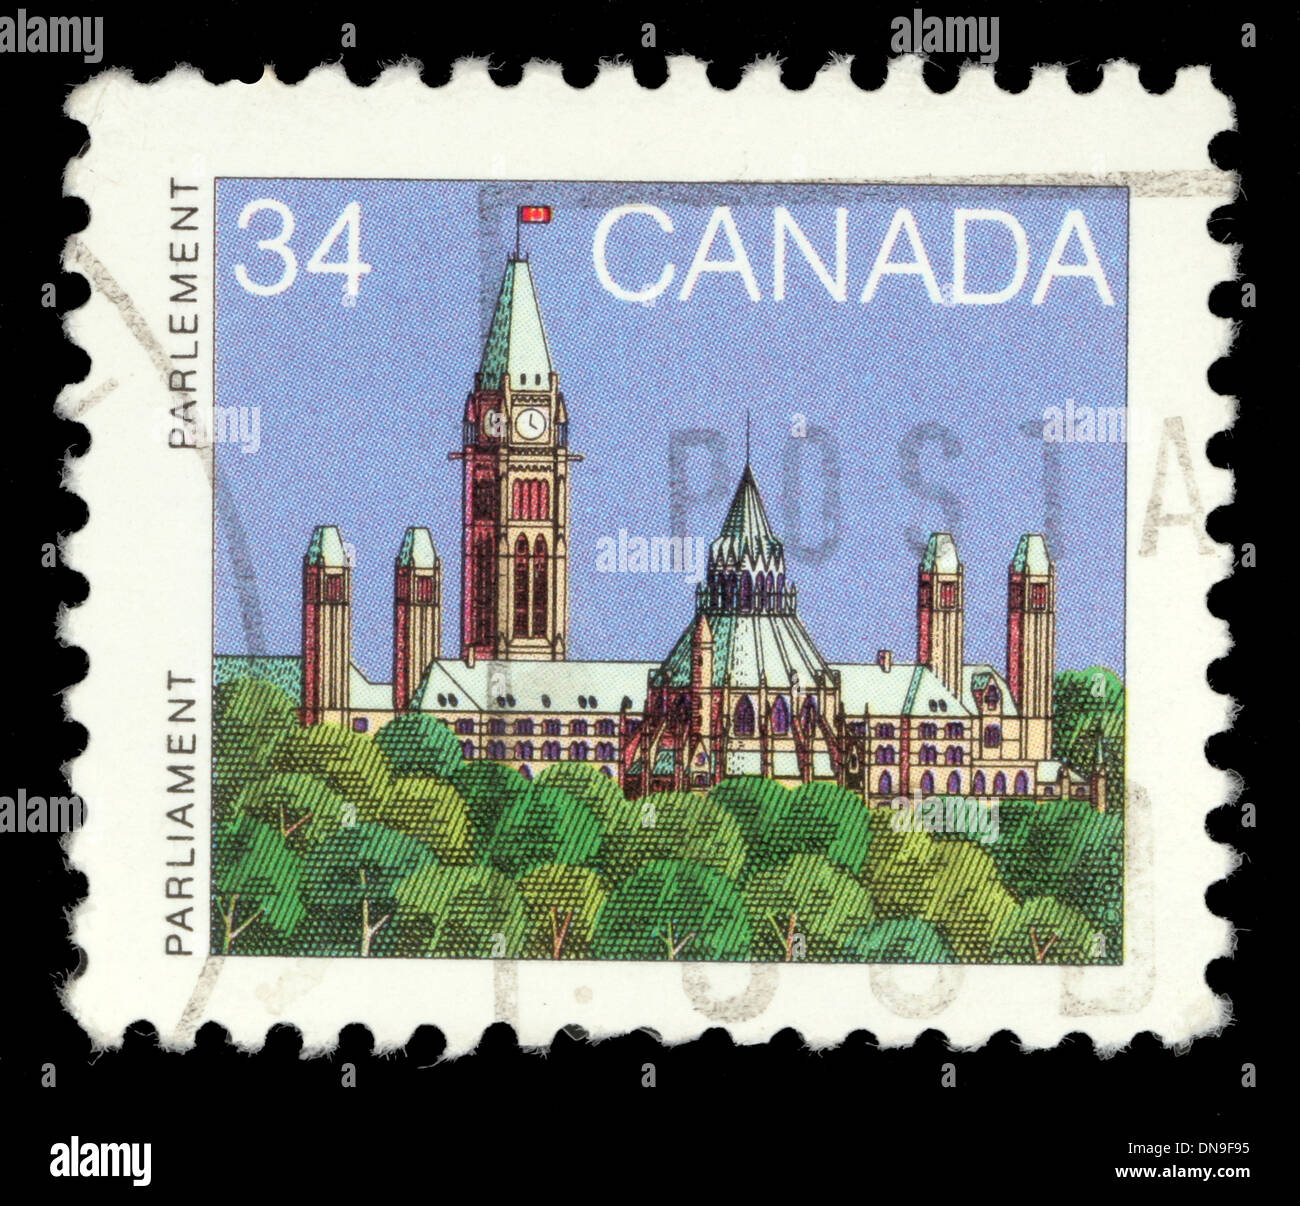 CANADA - CIRCA 1985: A stamp printed in Canada shows a Parliament (Library) in Ottawa, Ontario, series, circa 1985 Stock Photo